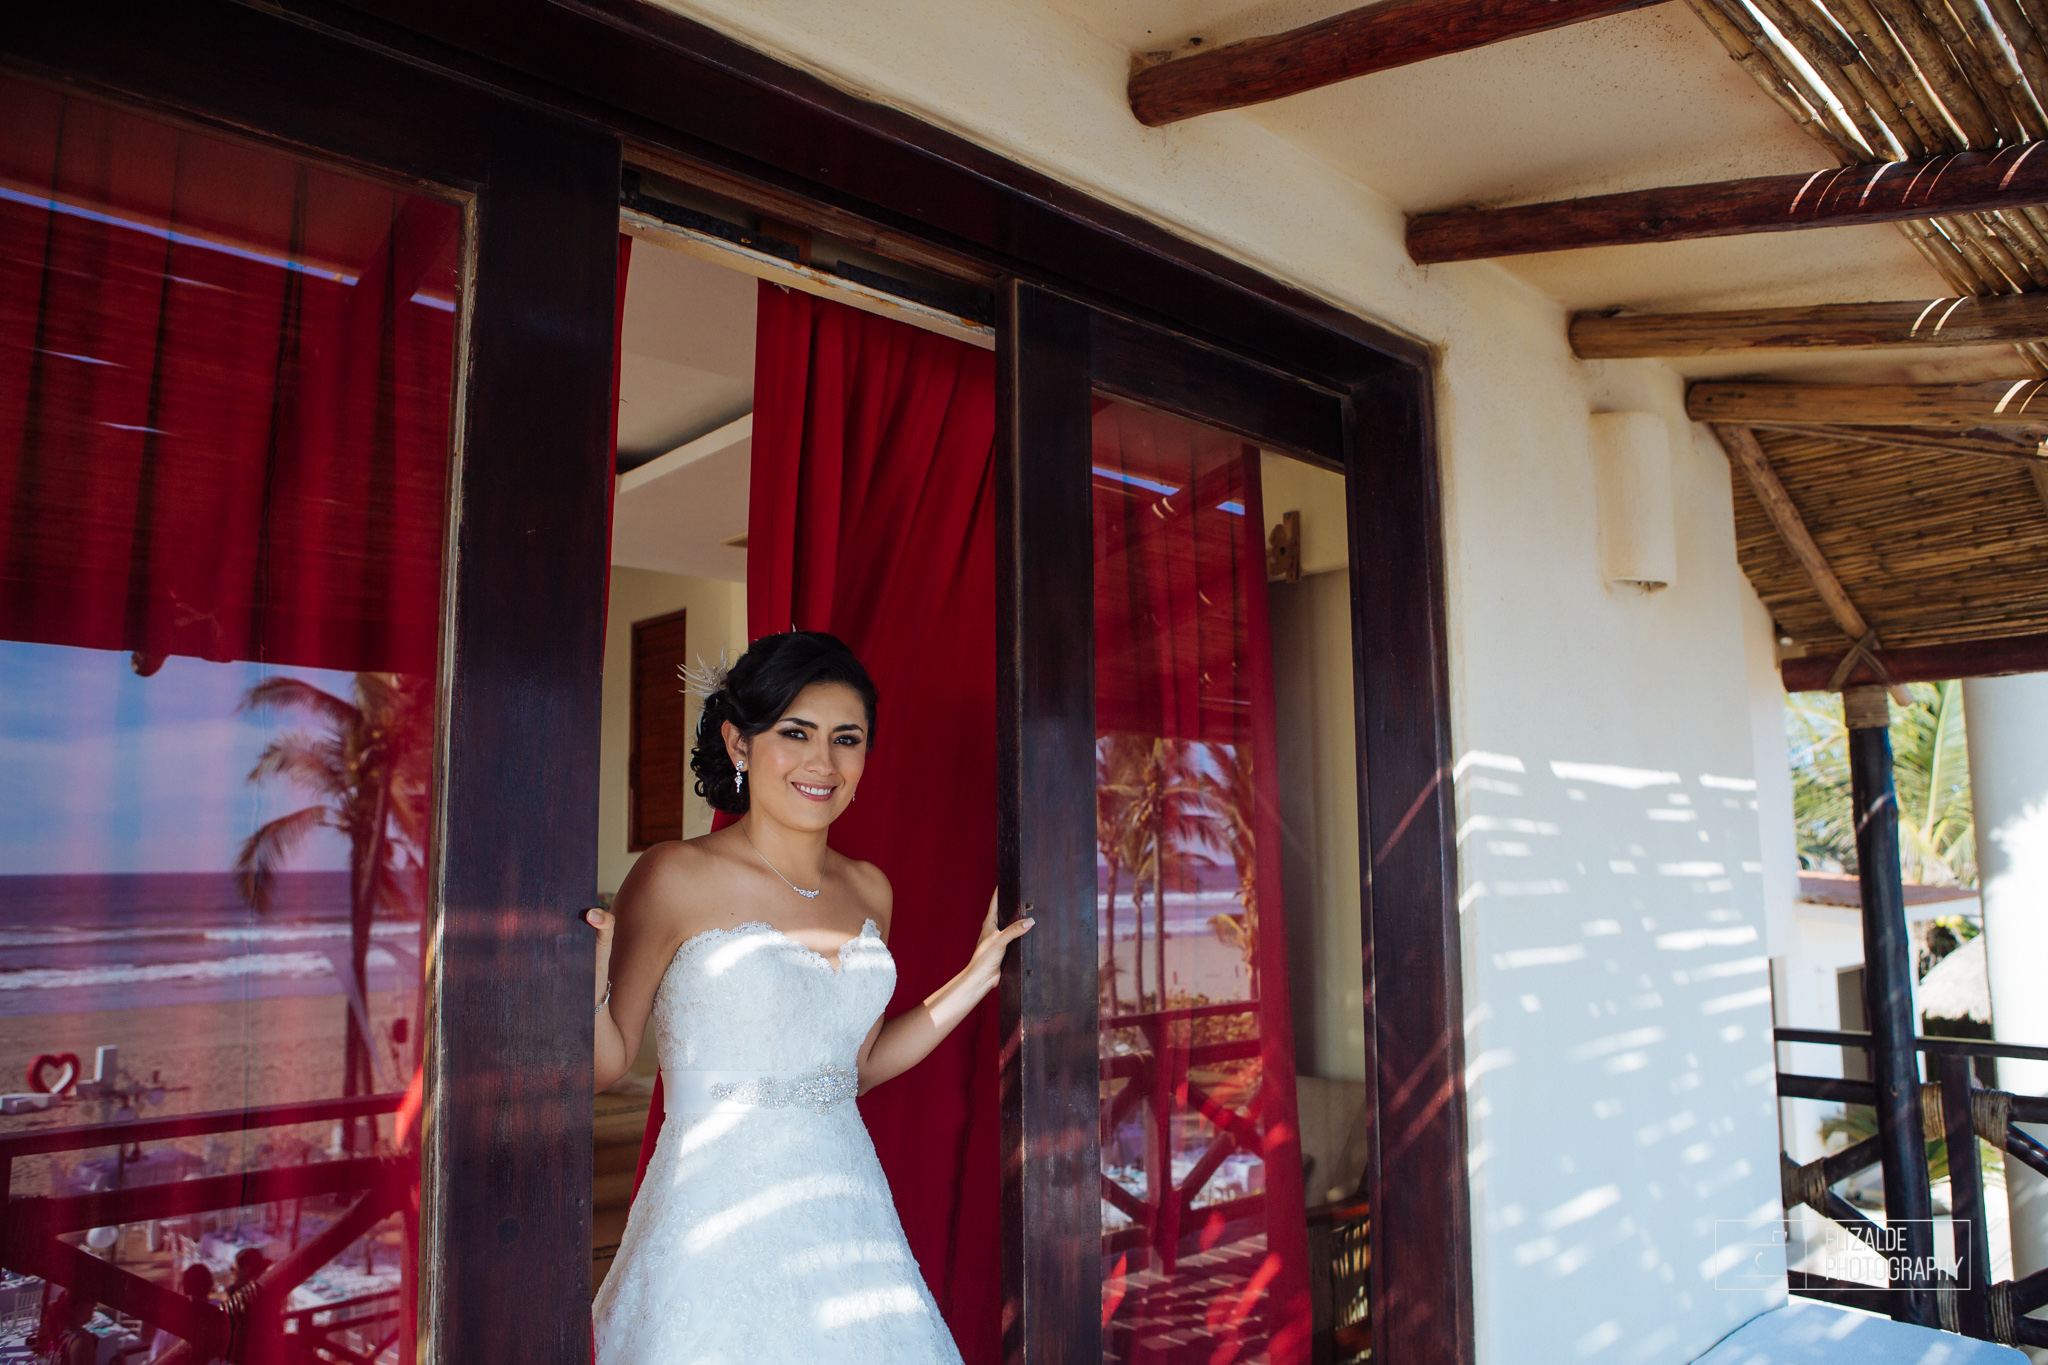 Pay and Ferran_Acapulco_Destination Wedding_Elizalde Photography-45.jpg